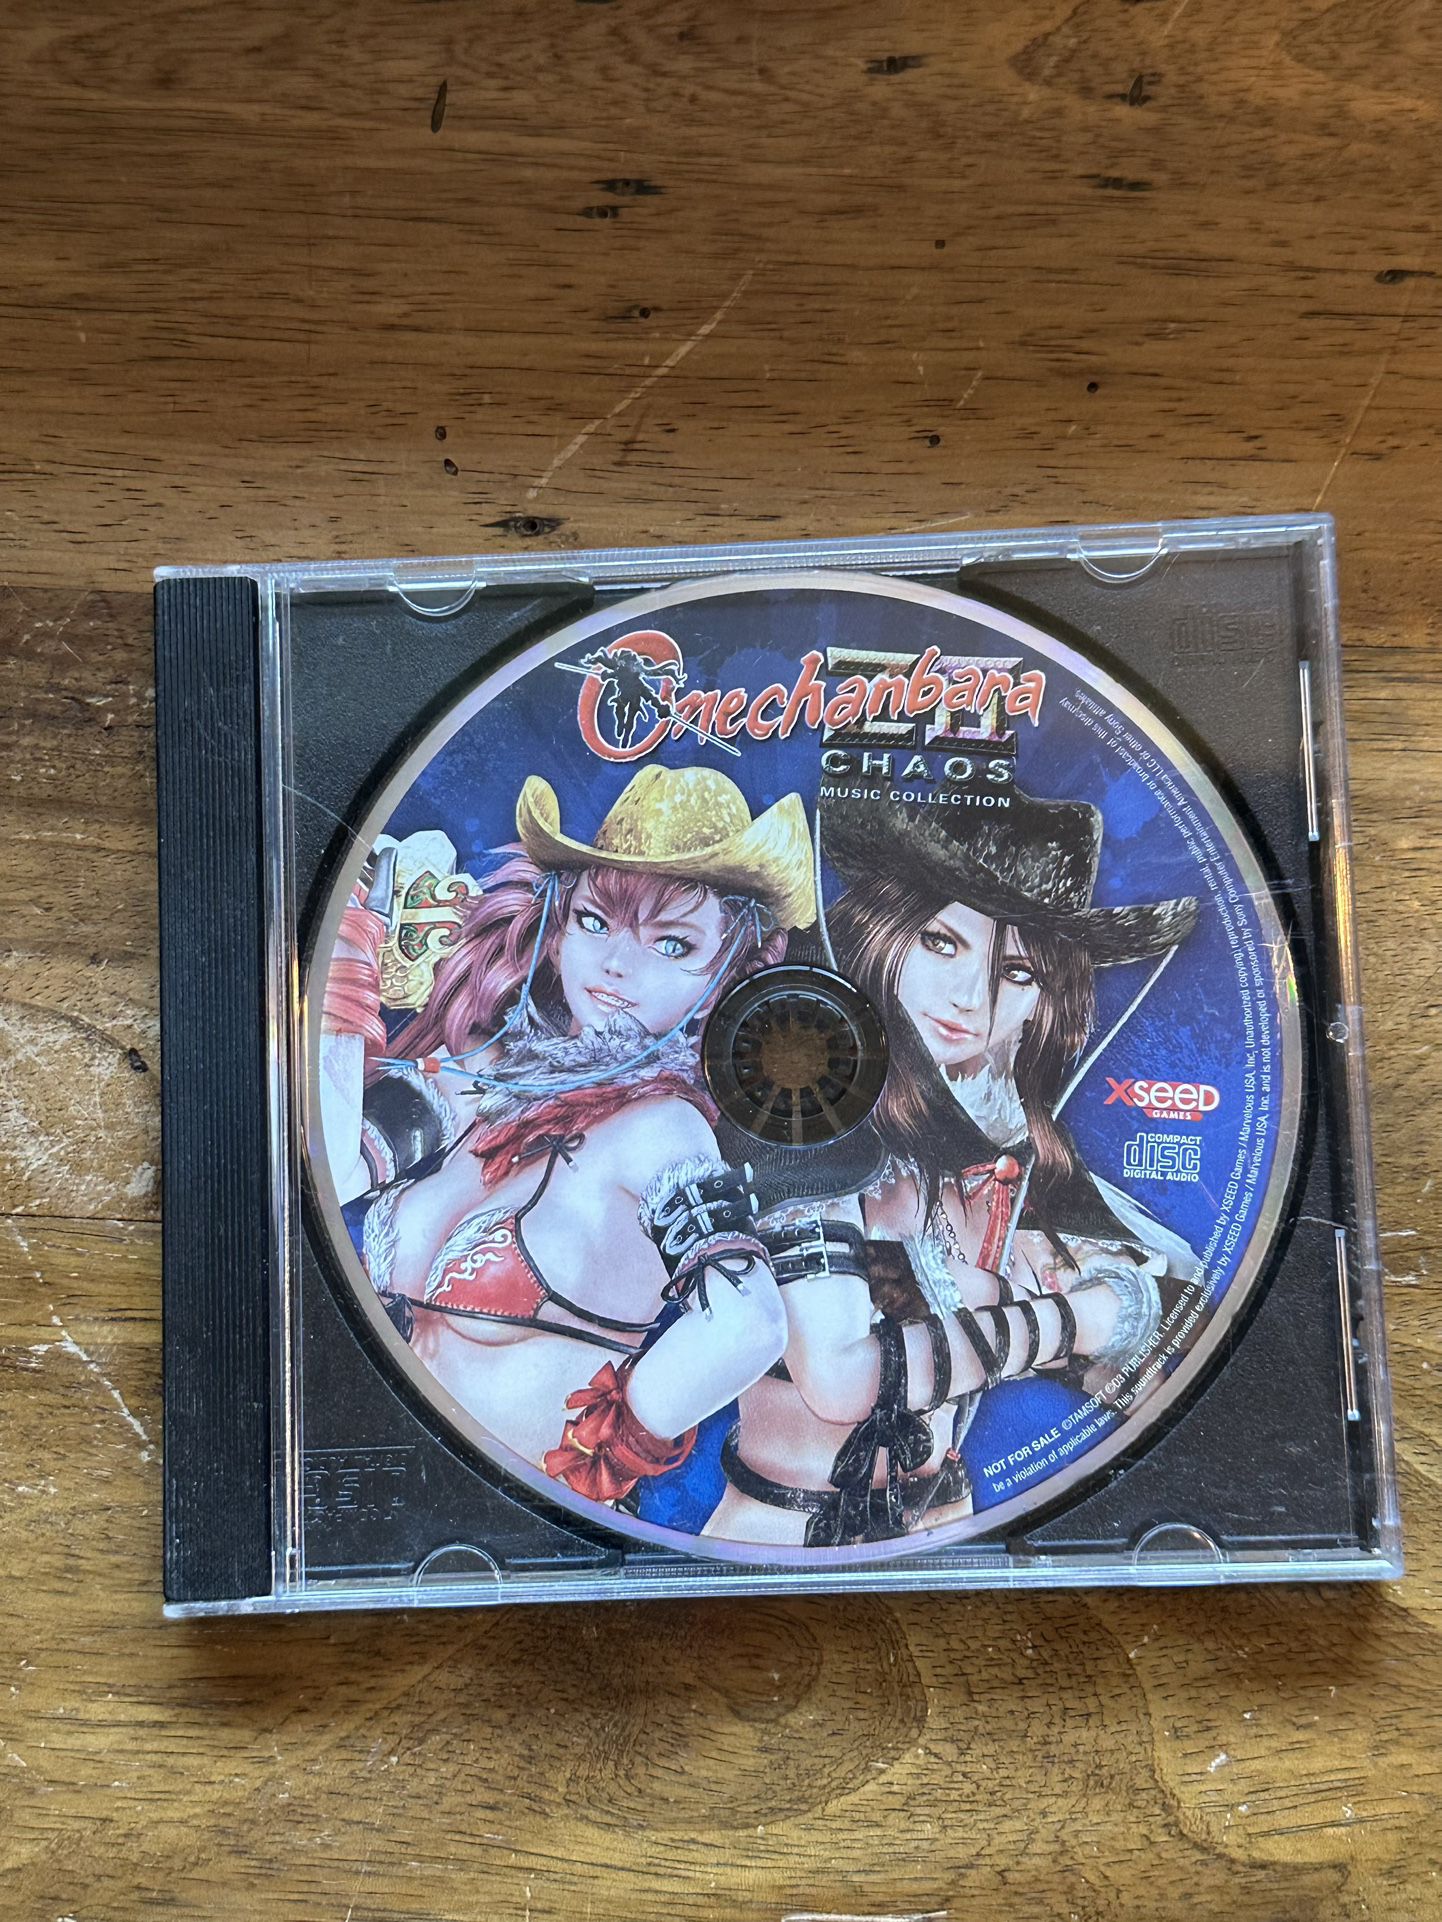 Onechanbara Z2 Chaos Music Collection (Audio CD, Soundtrack) XSEED ZII